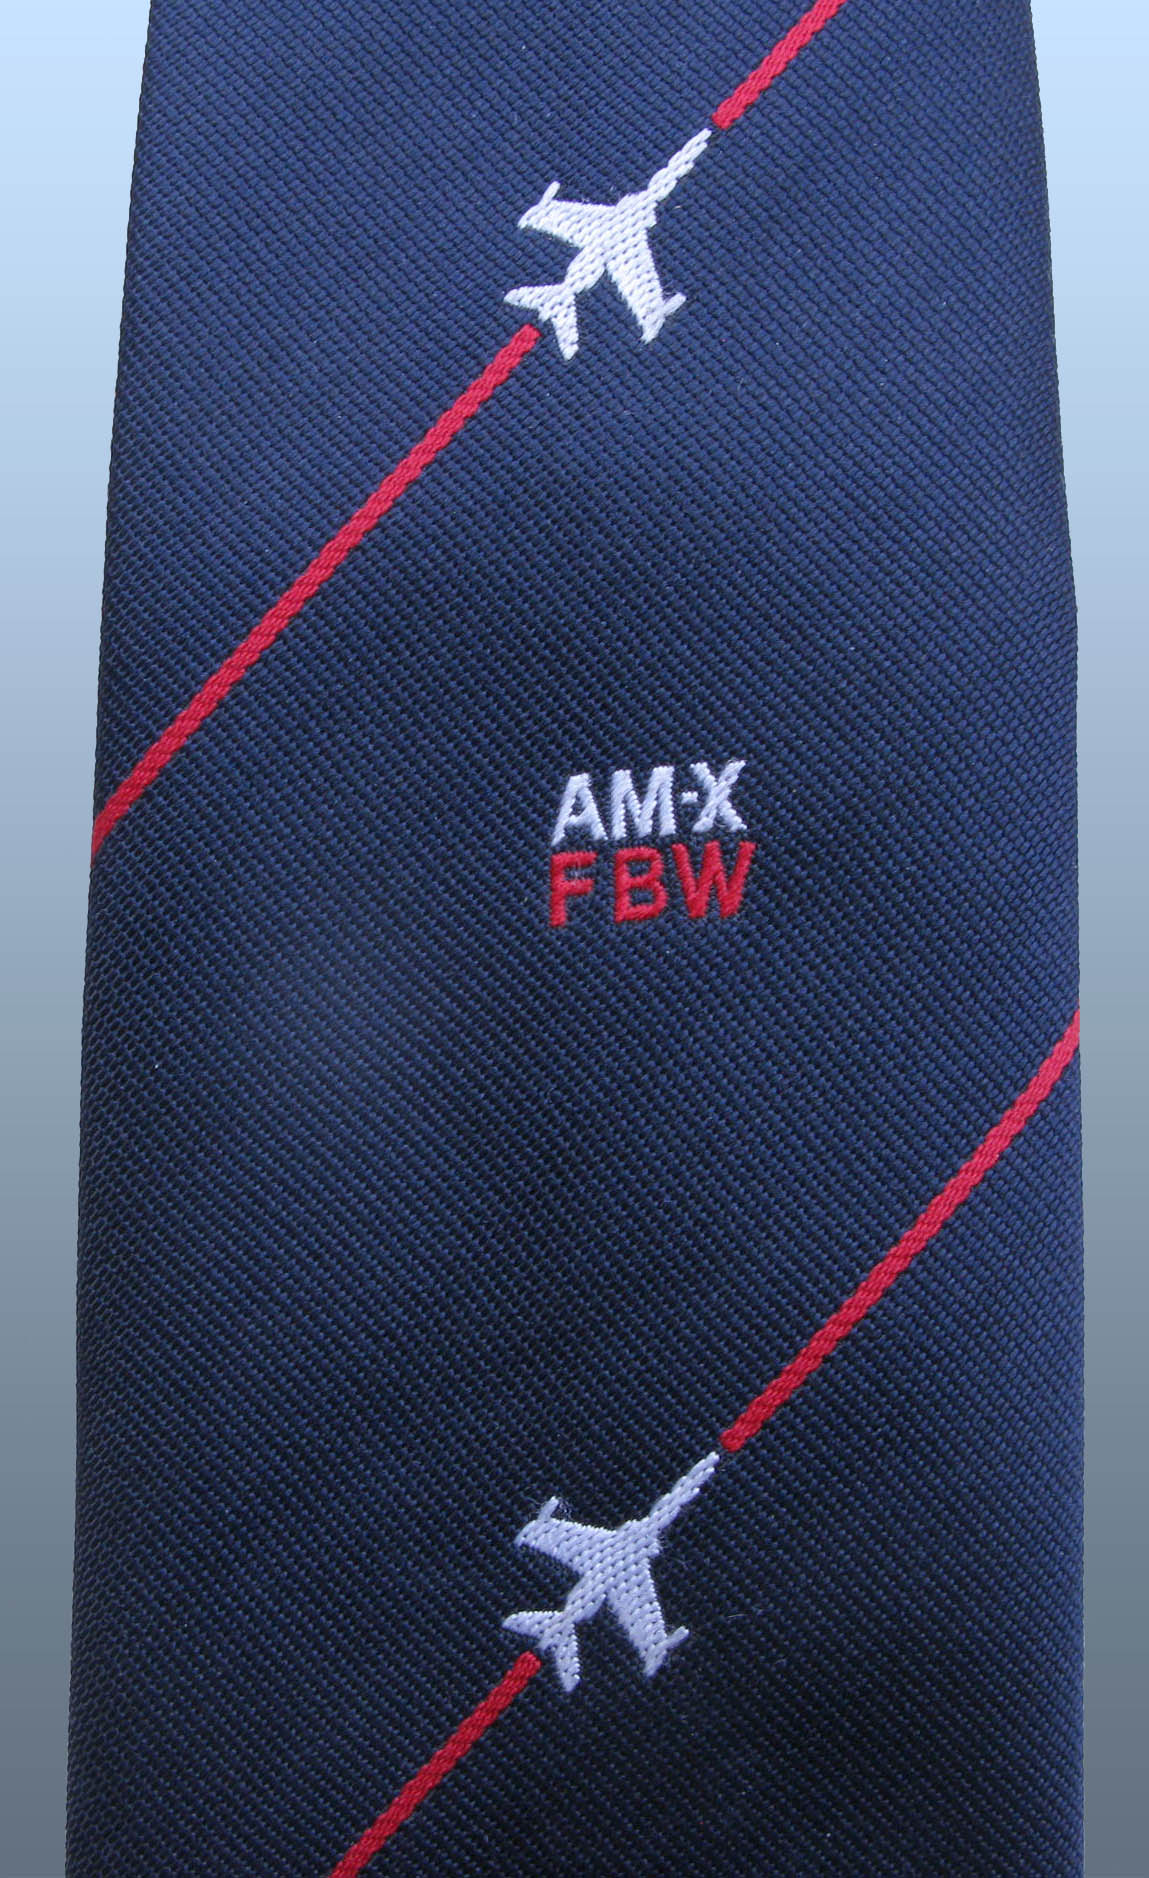 AM-X FBW Tie